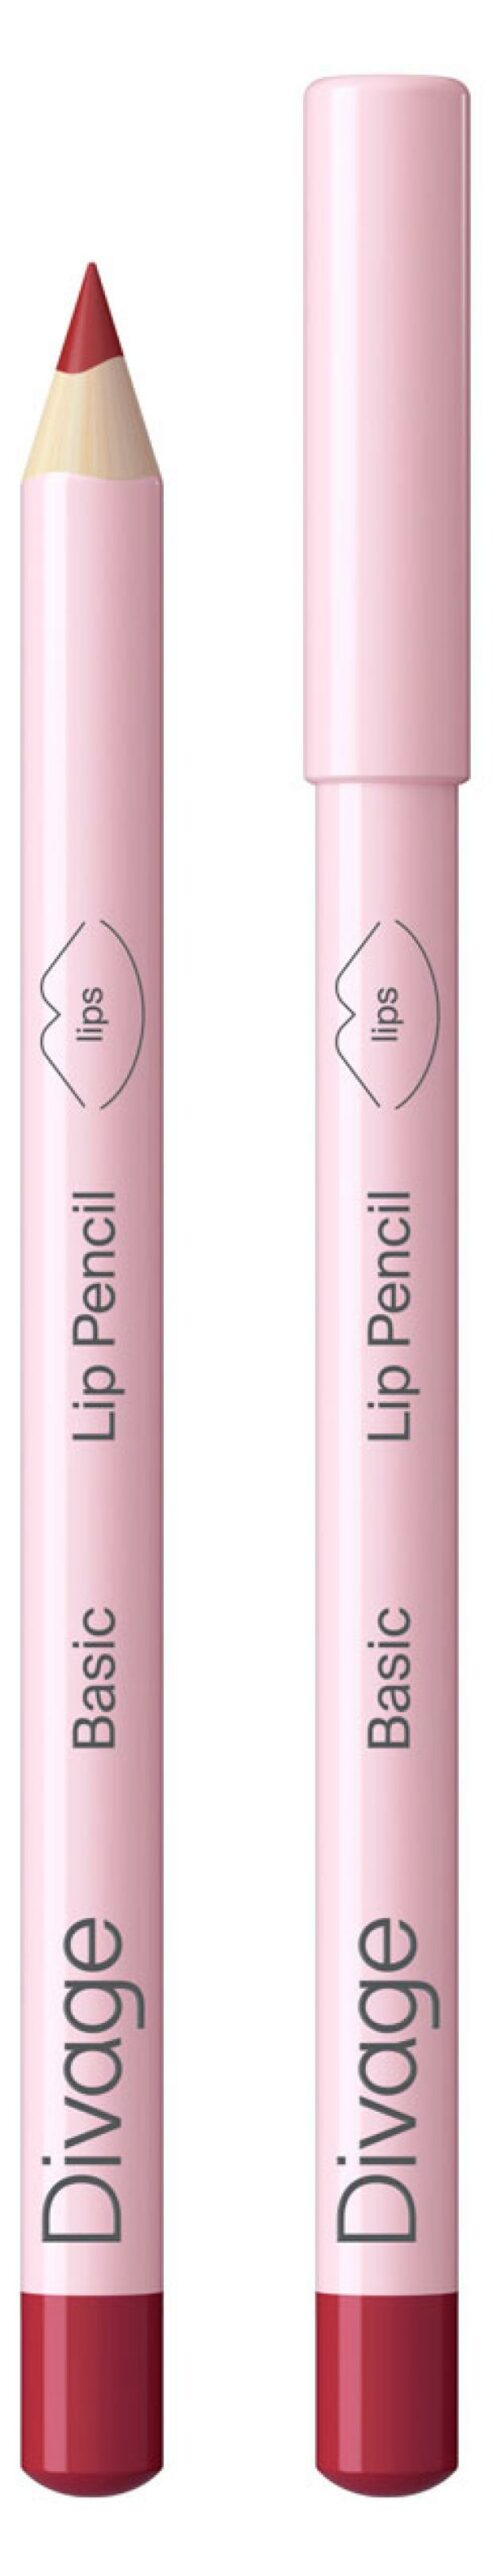 карандаш для губ divage basic тон 11